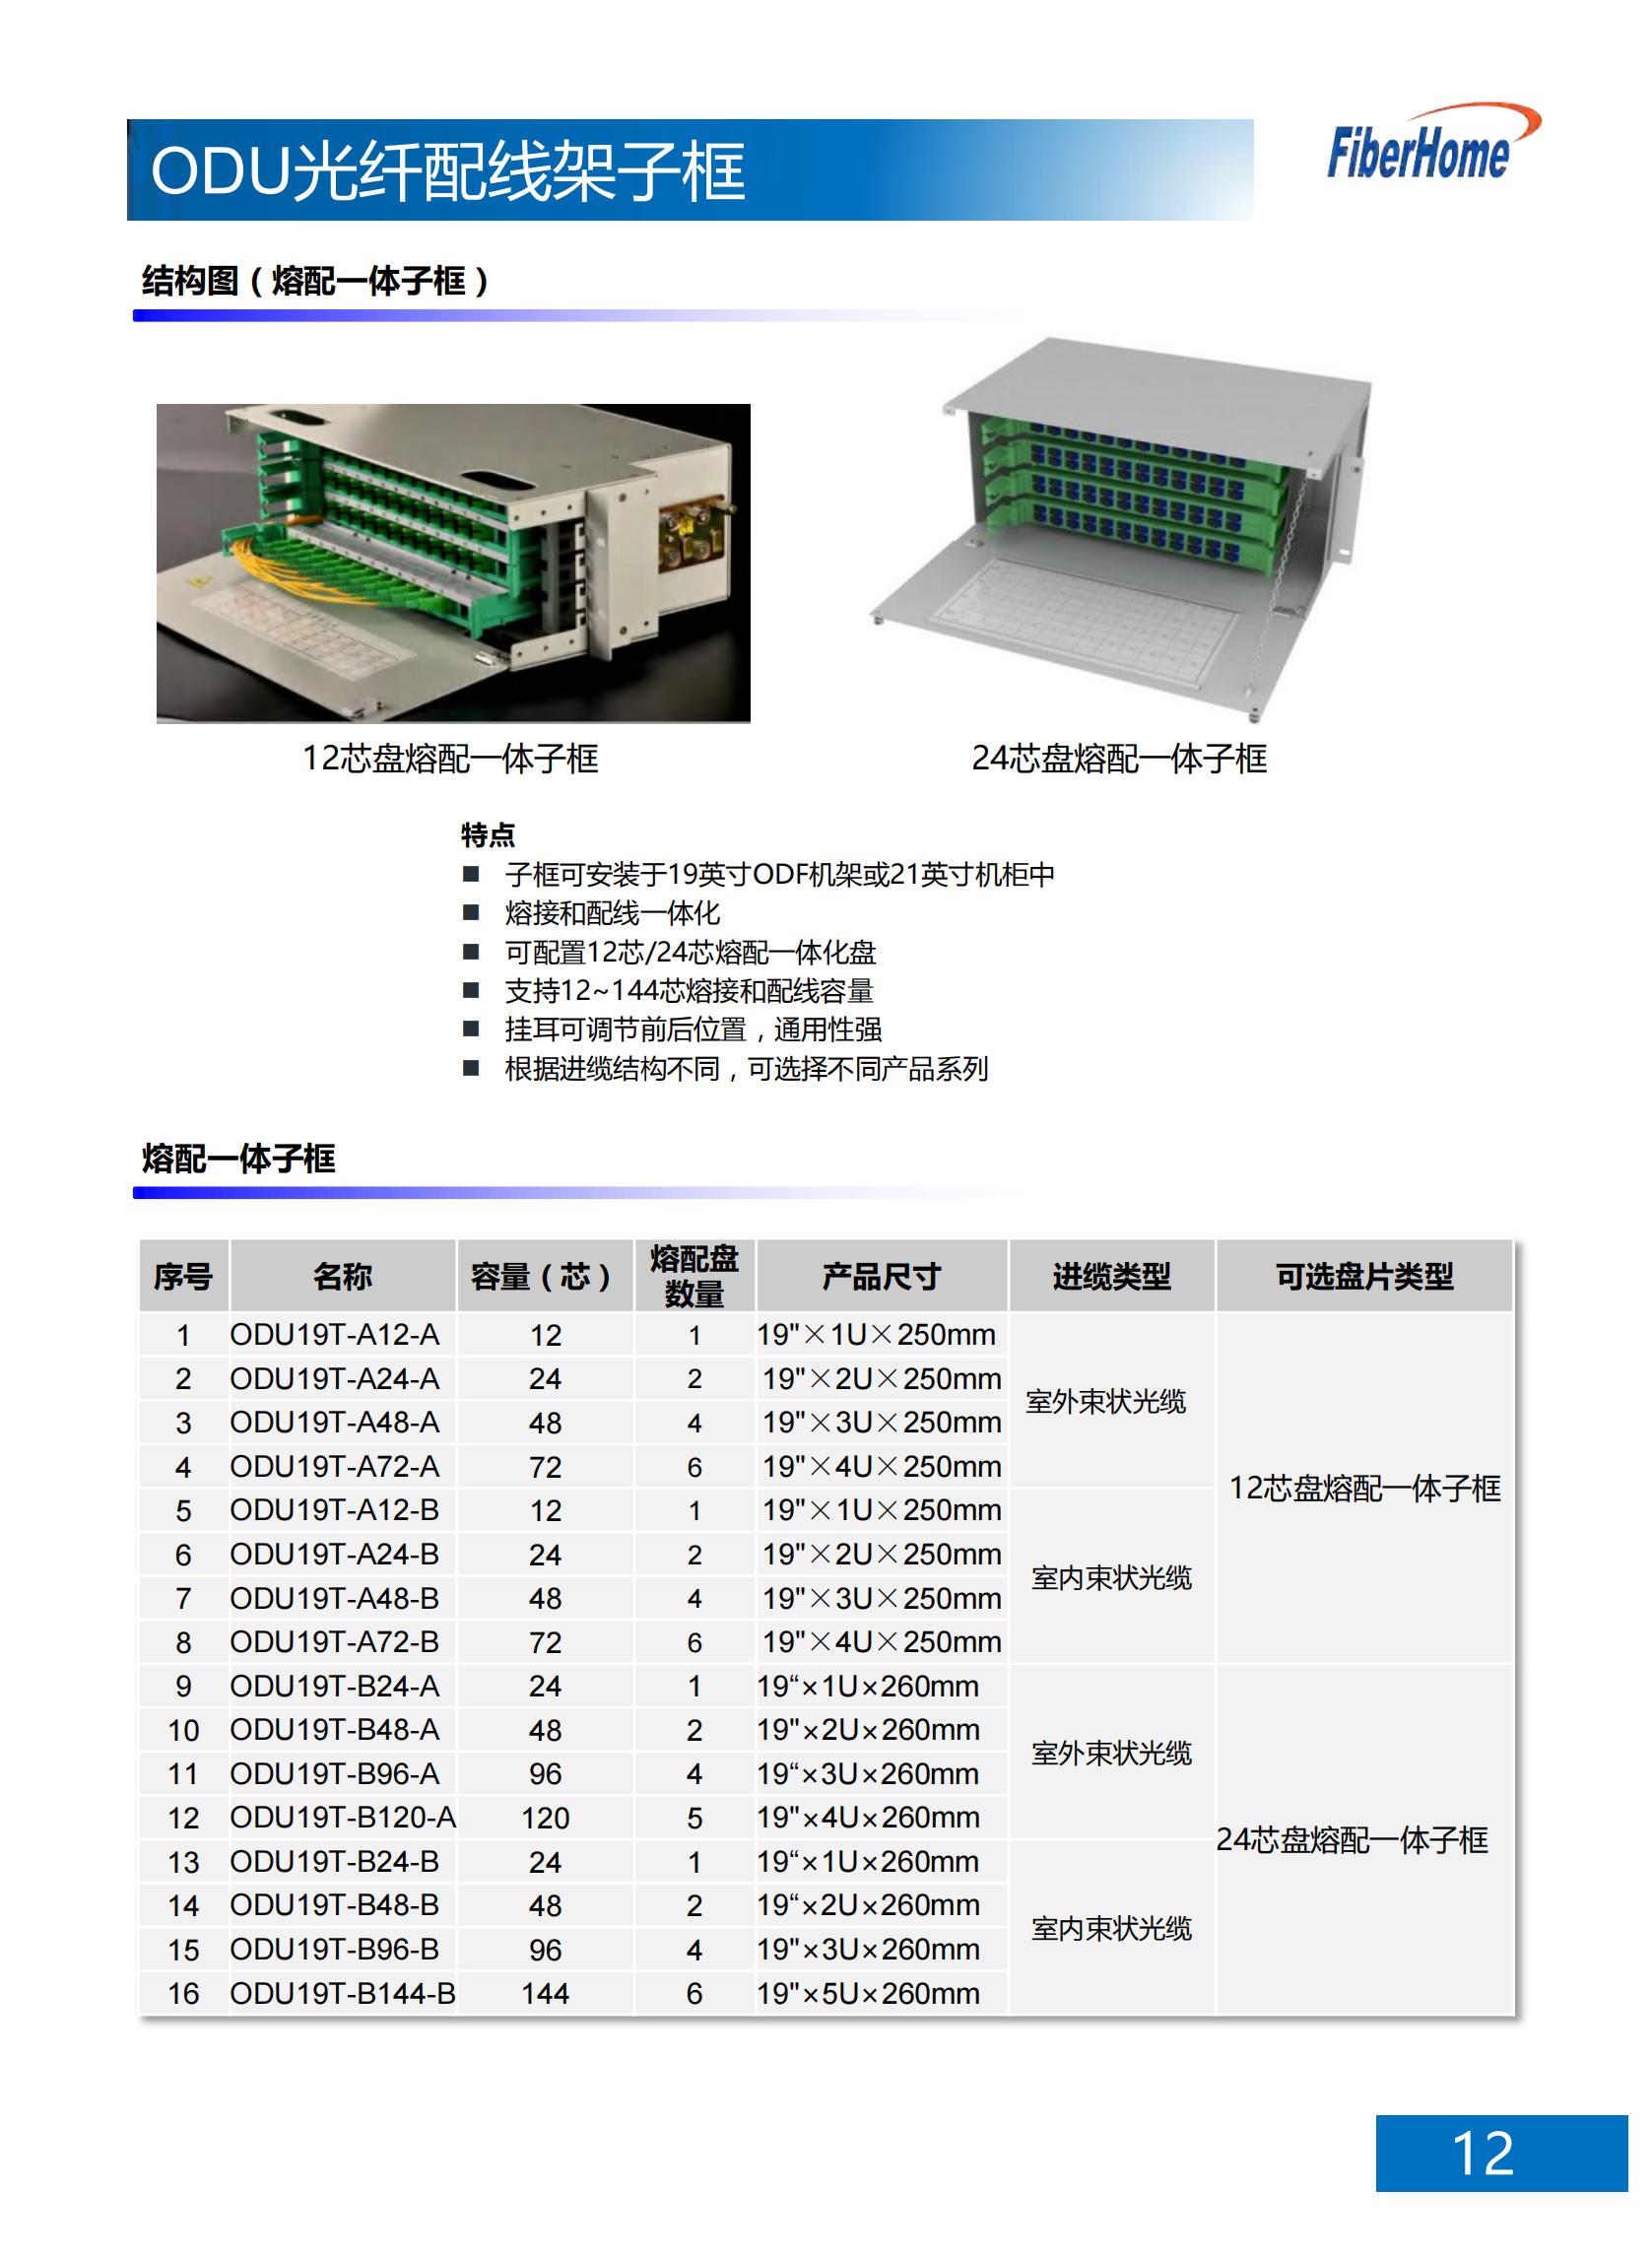 24-core ODU optical fiber distribution frame ODU19T-A24-B-LC (including 24-core LC fusion integration unit*1)